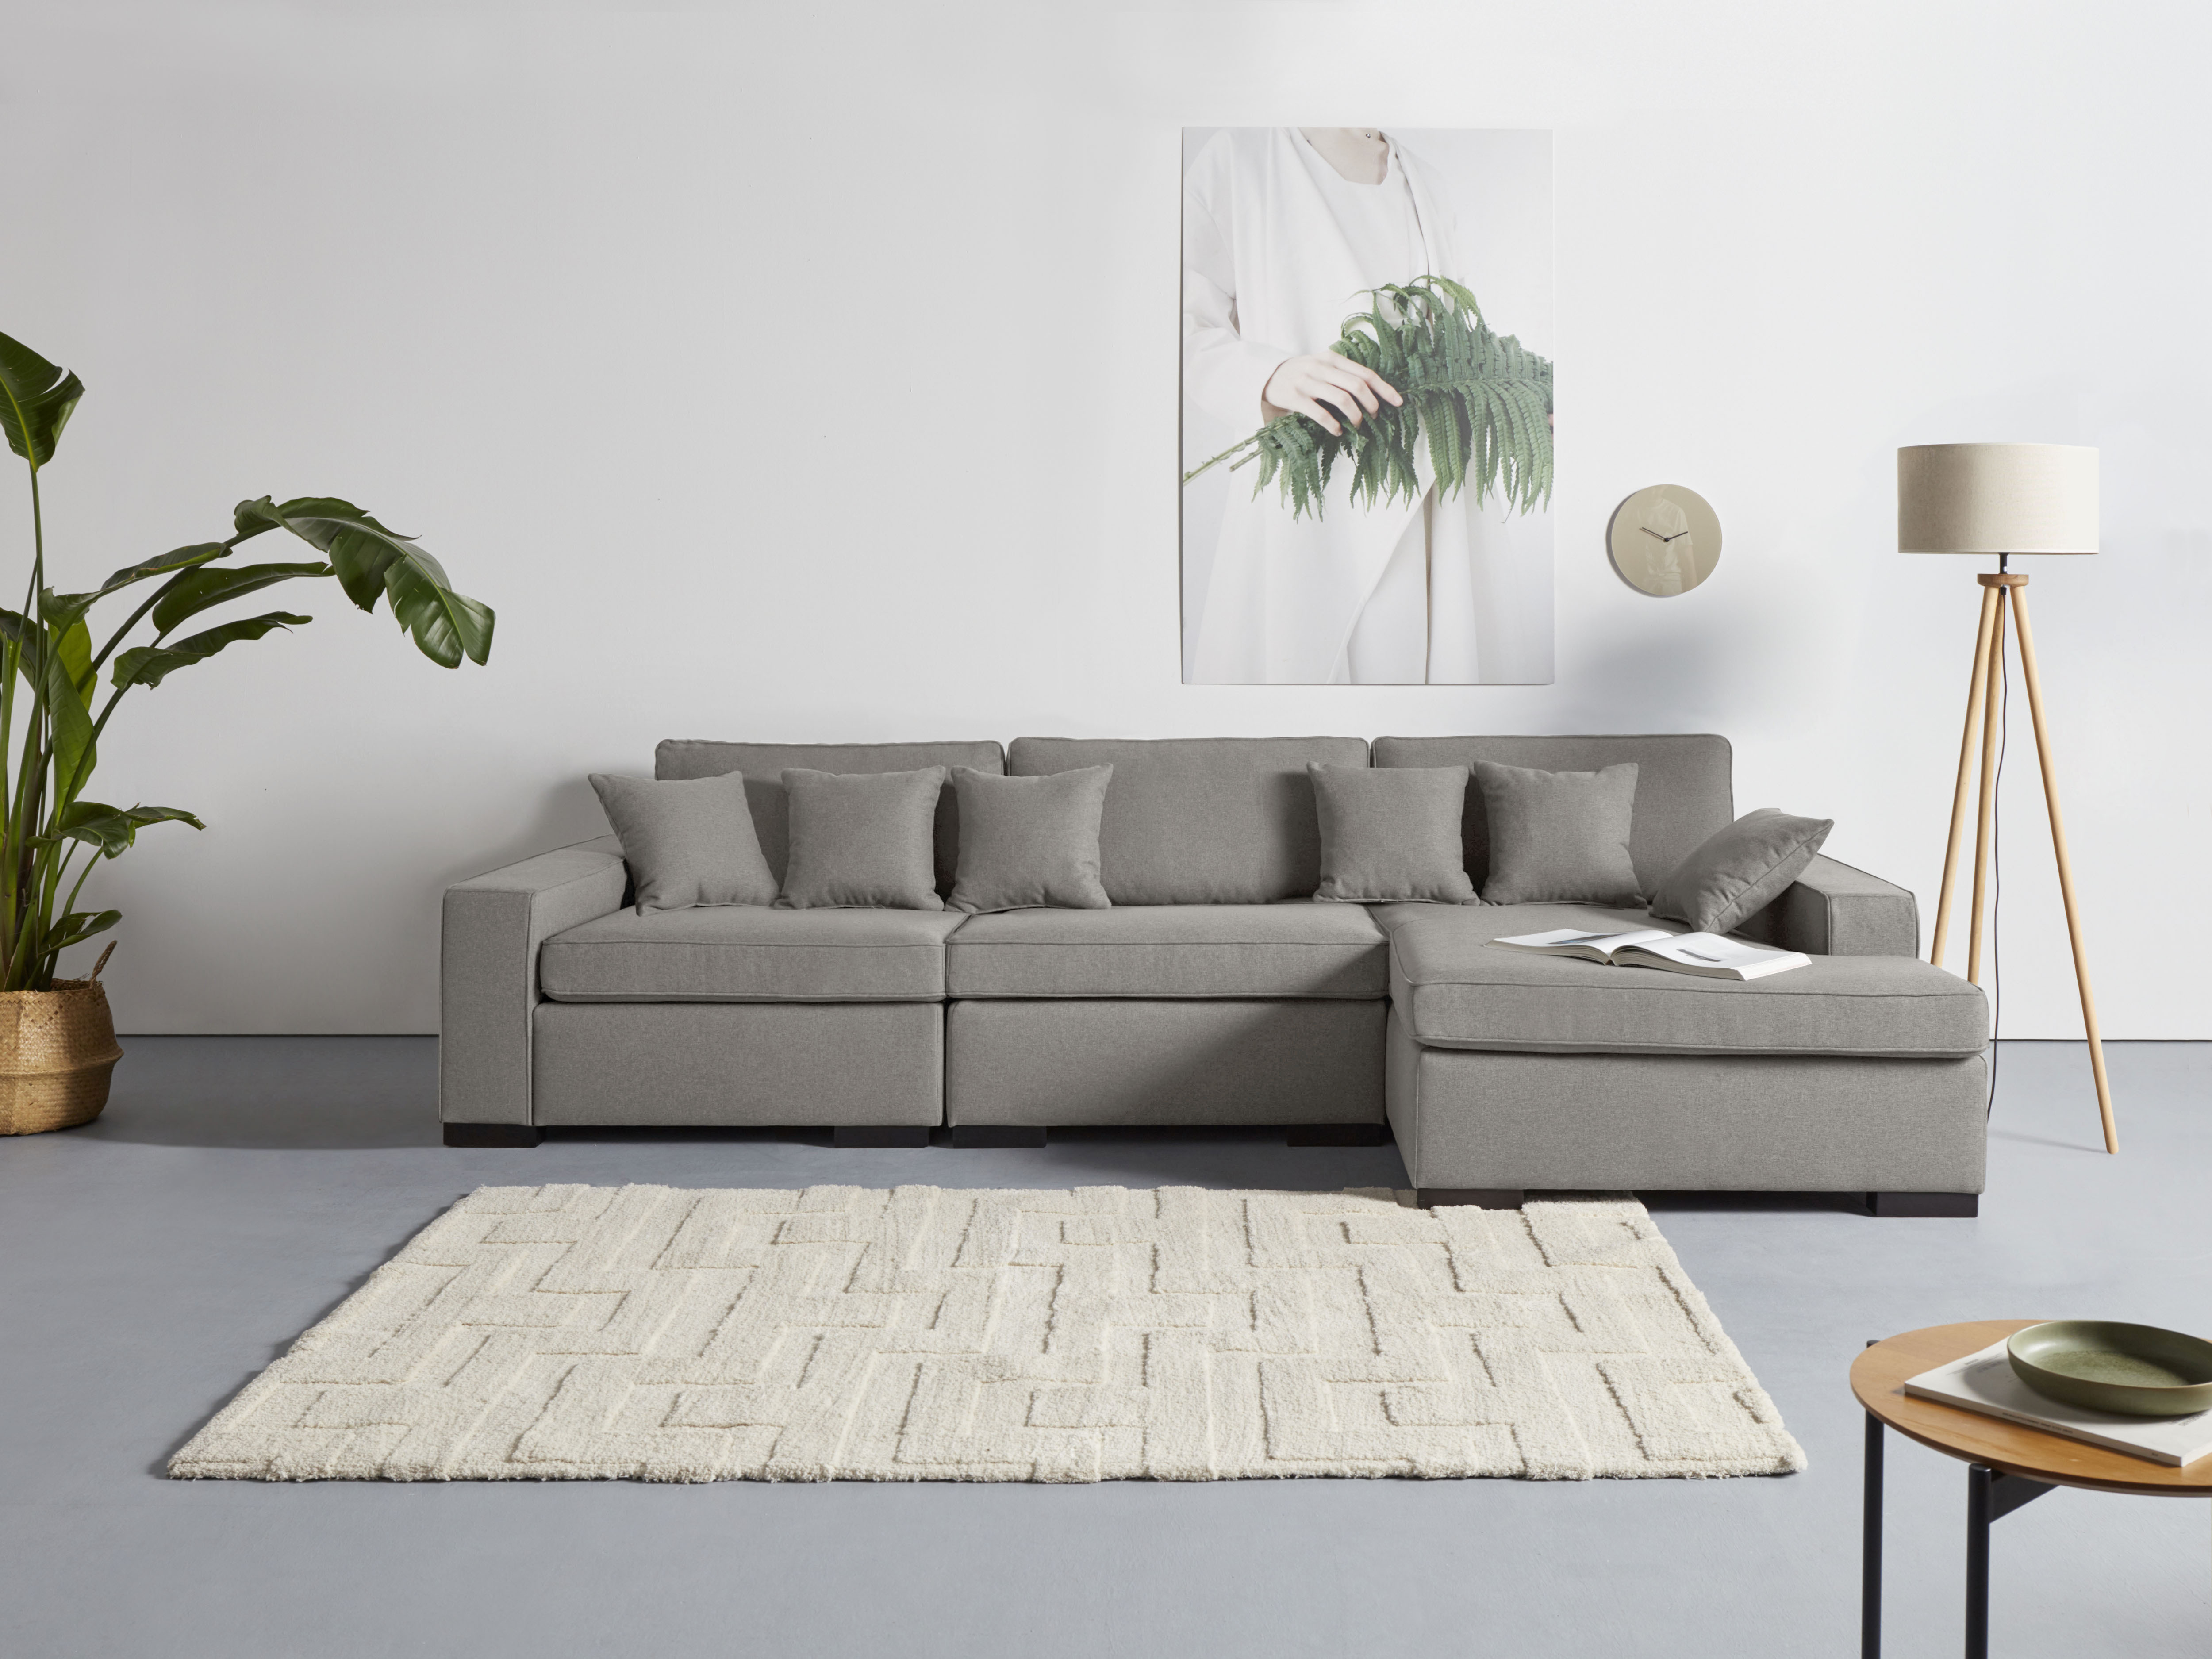 Guido Maria Kretschmer Home&Living Ottomane "Skara", Lounge-Sofa mit Federkernpolsterung, in vielen Bezugsvarianten